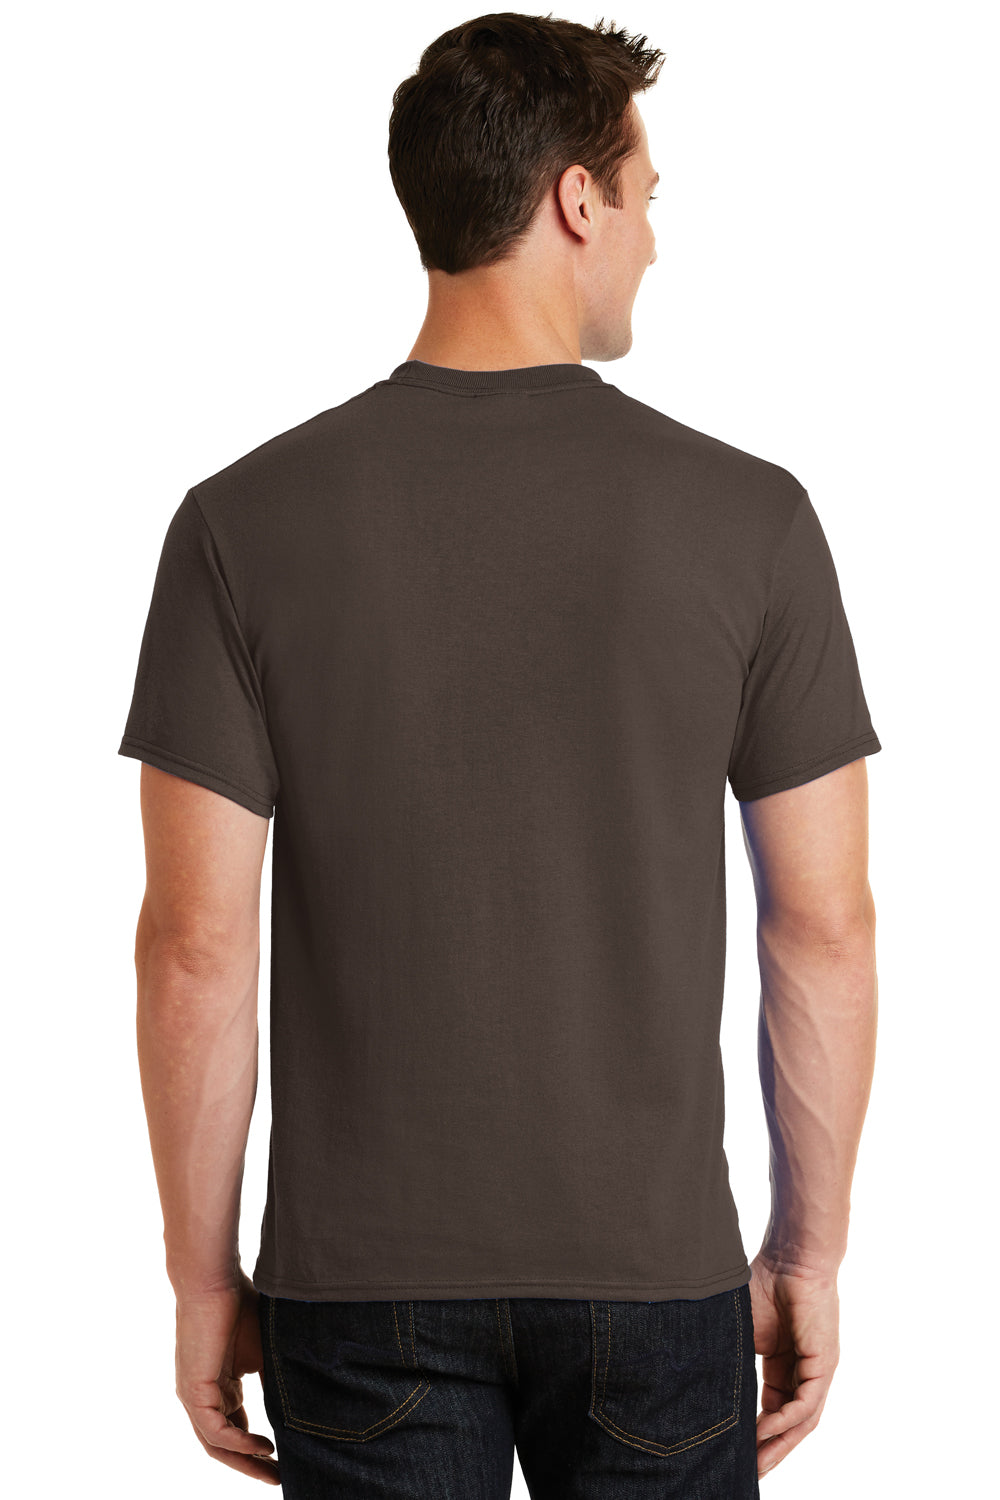 Port & Company PC55 Mens Core Short Sleeve Crewneck T-Shirt Brown Back